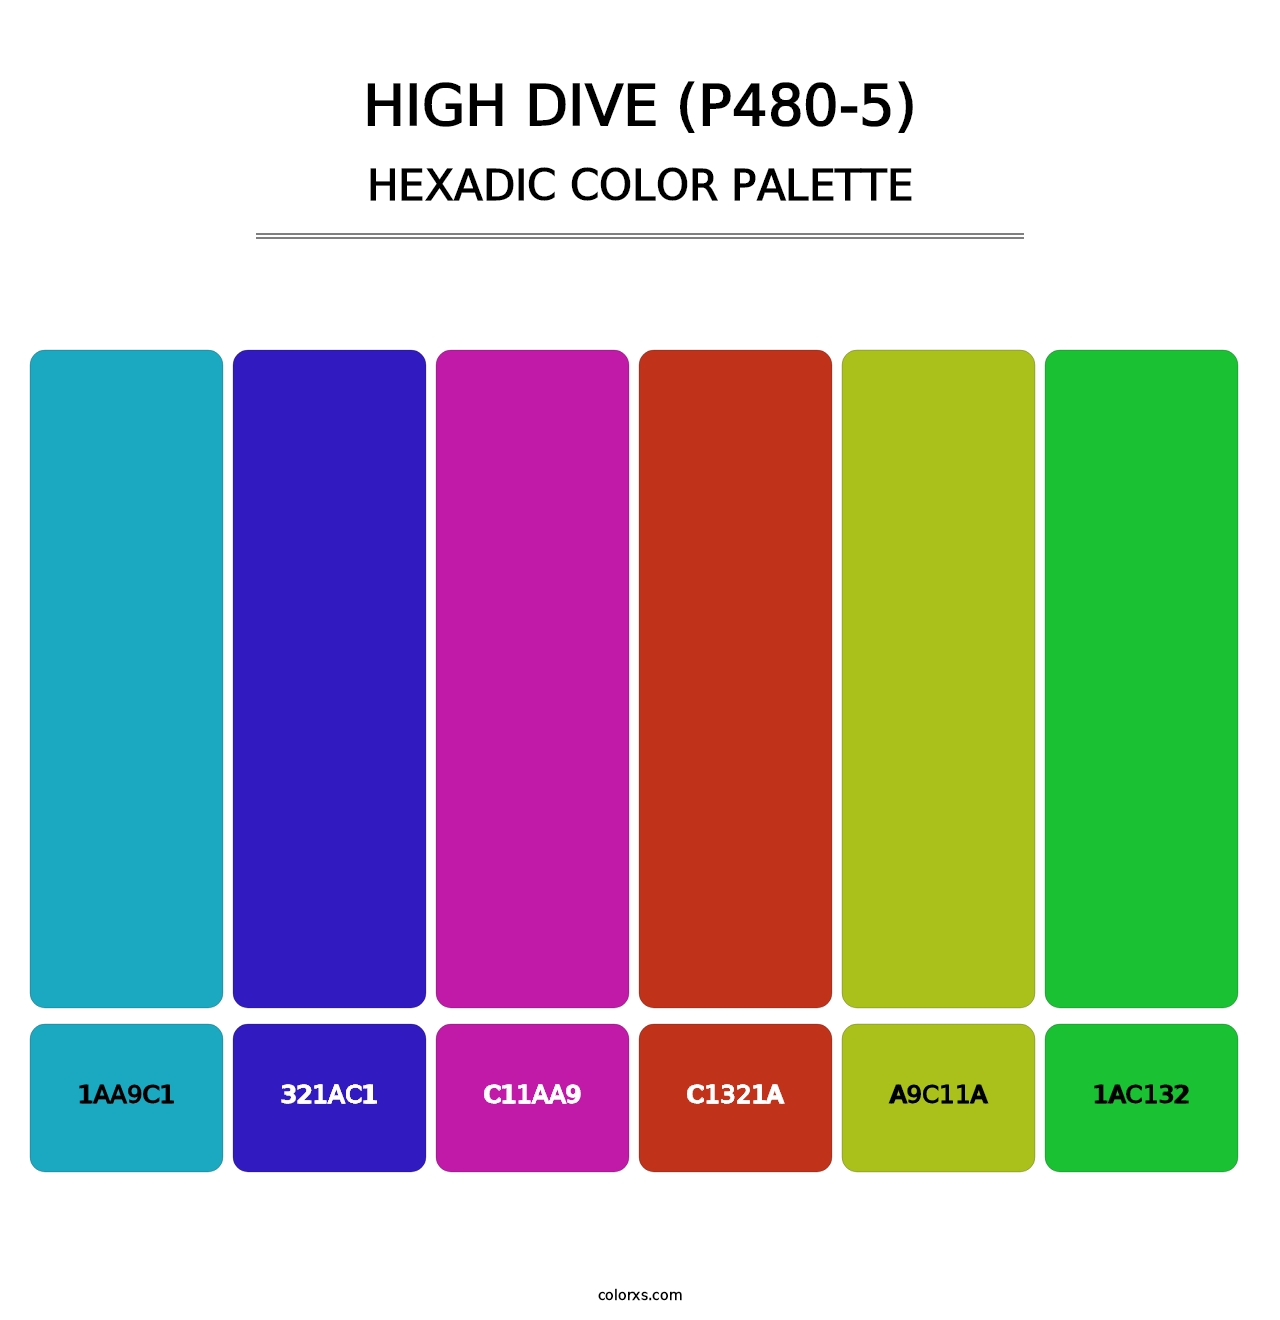 High Dive (P480-5) - Hexadic Color Palette